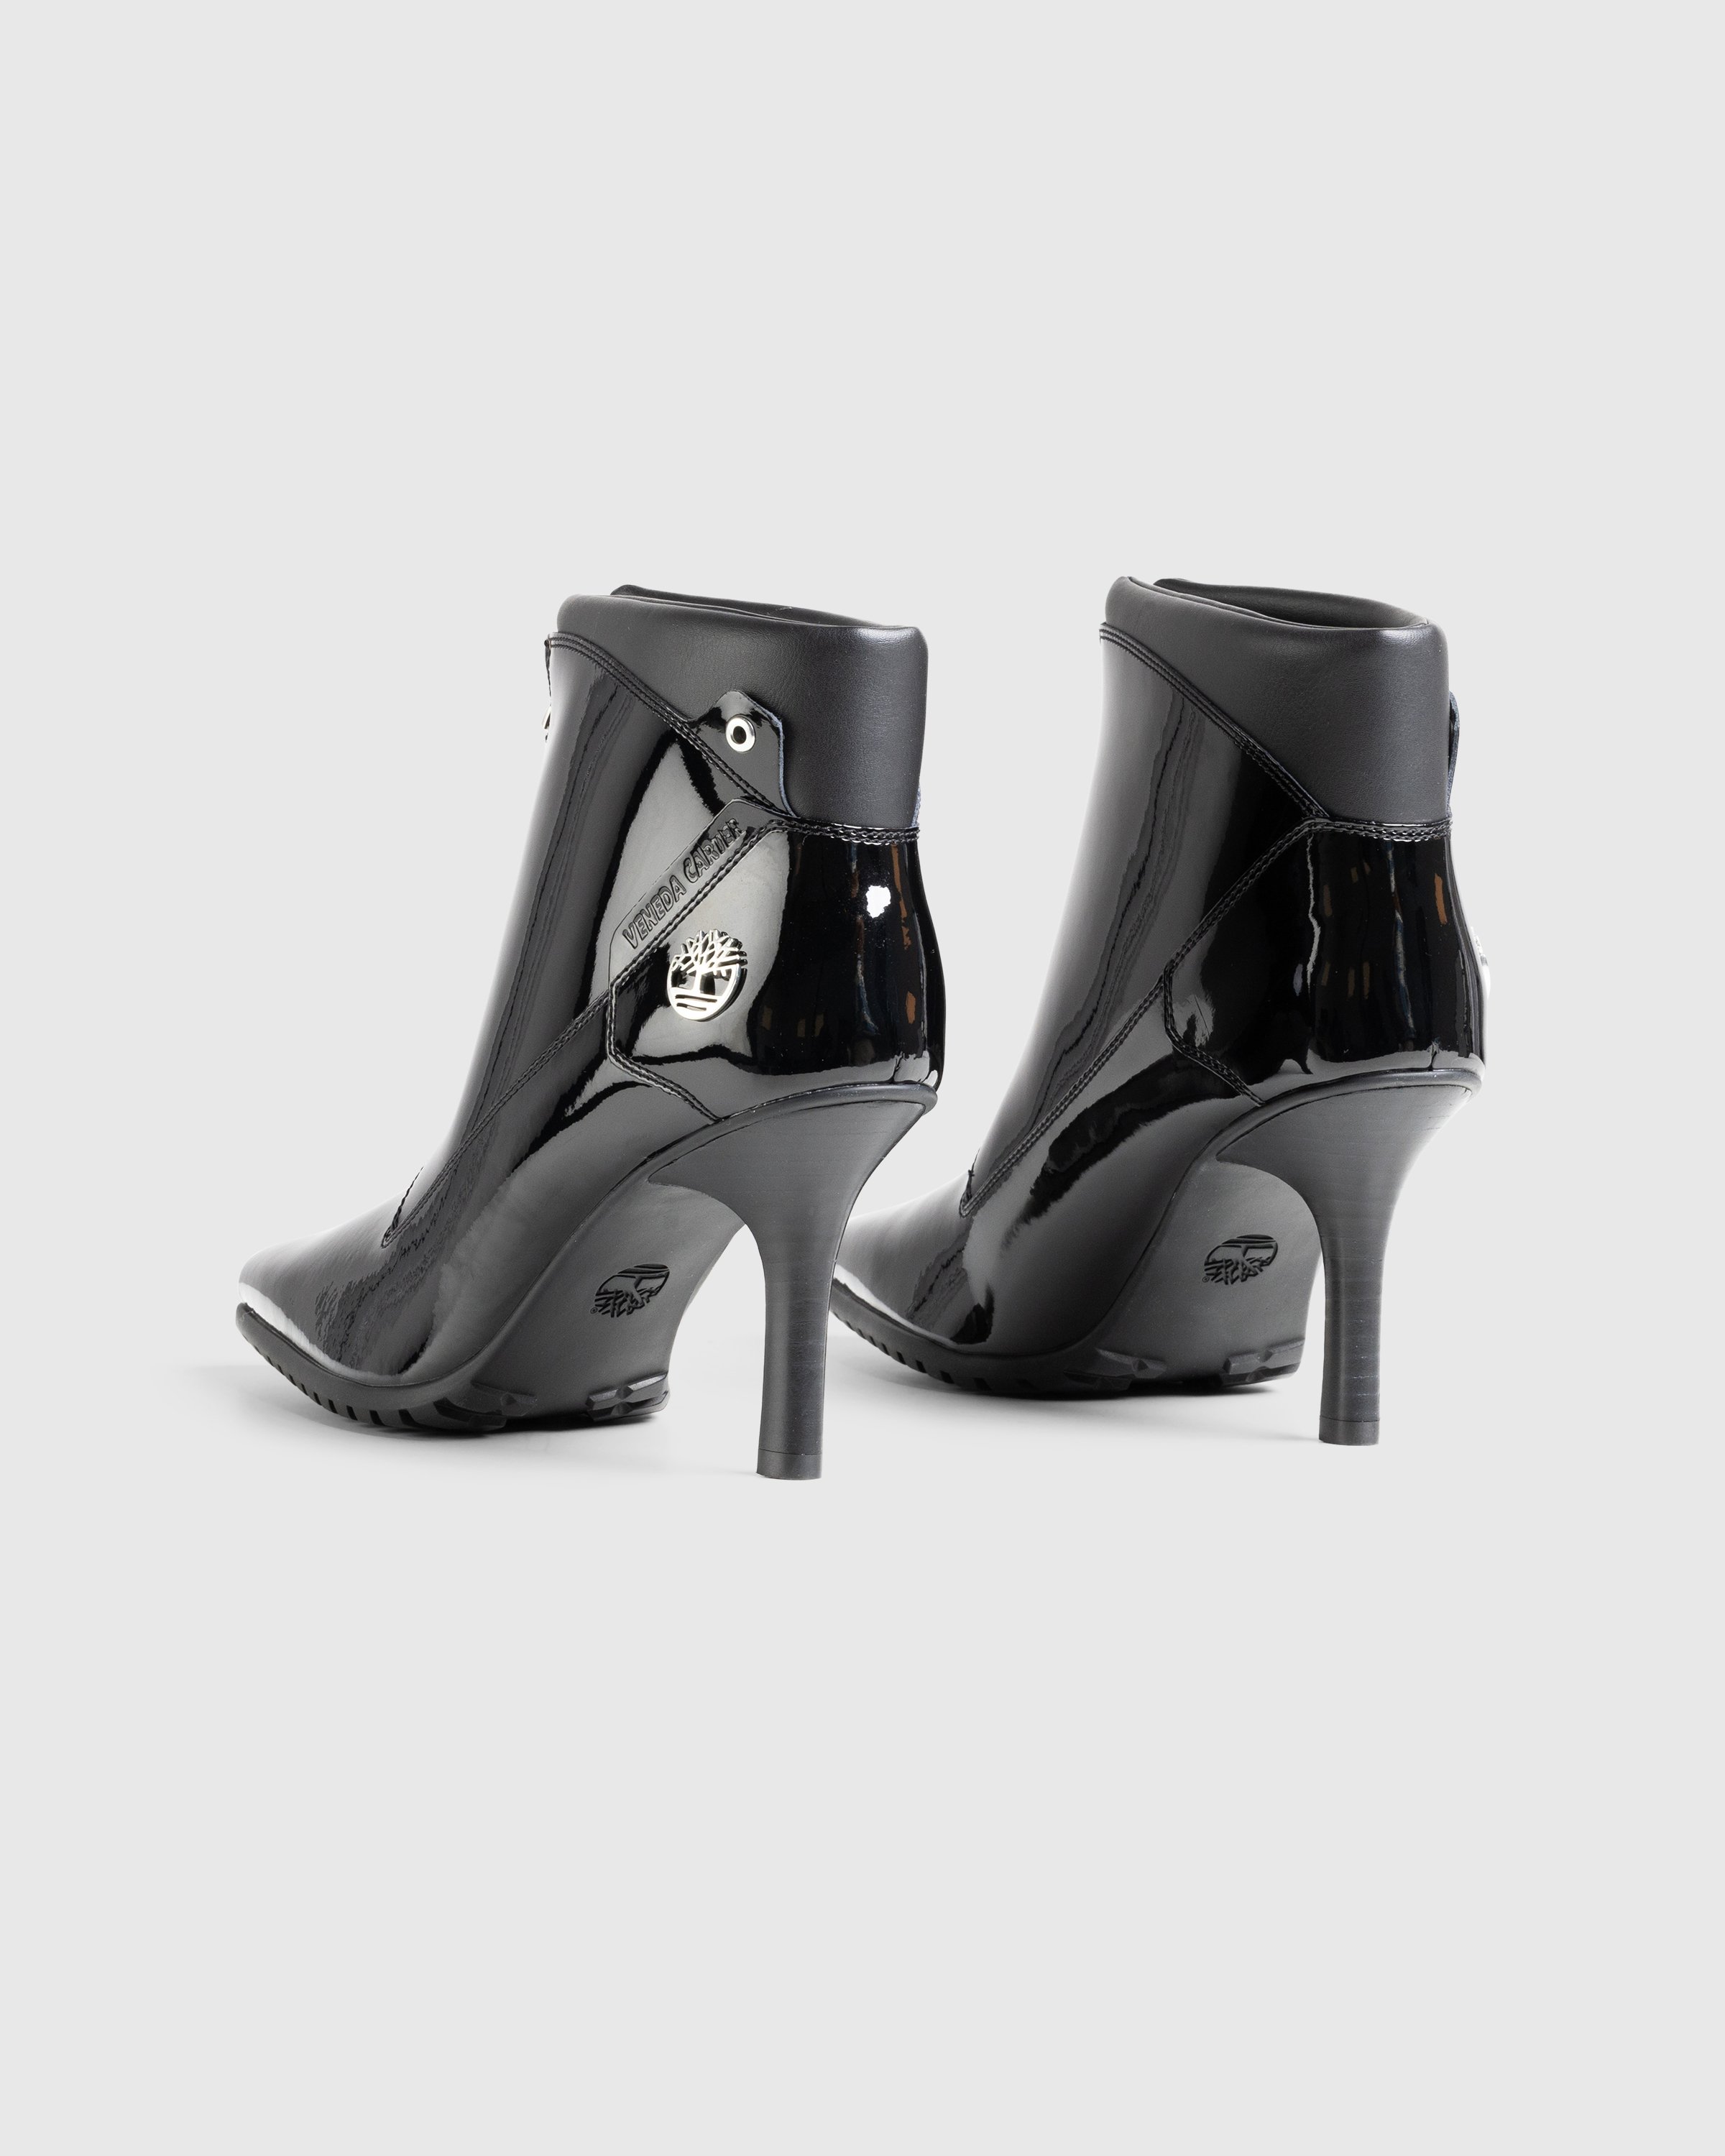 Veneda Carter x Timberland - MID ZIP UP BOOT BLACK PATENT LEATHER - Footwear - Black - Image 4